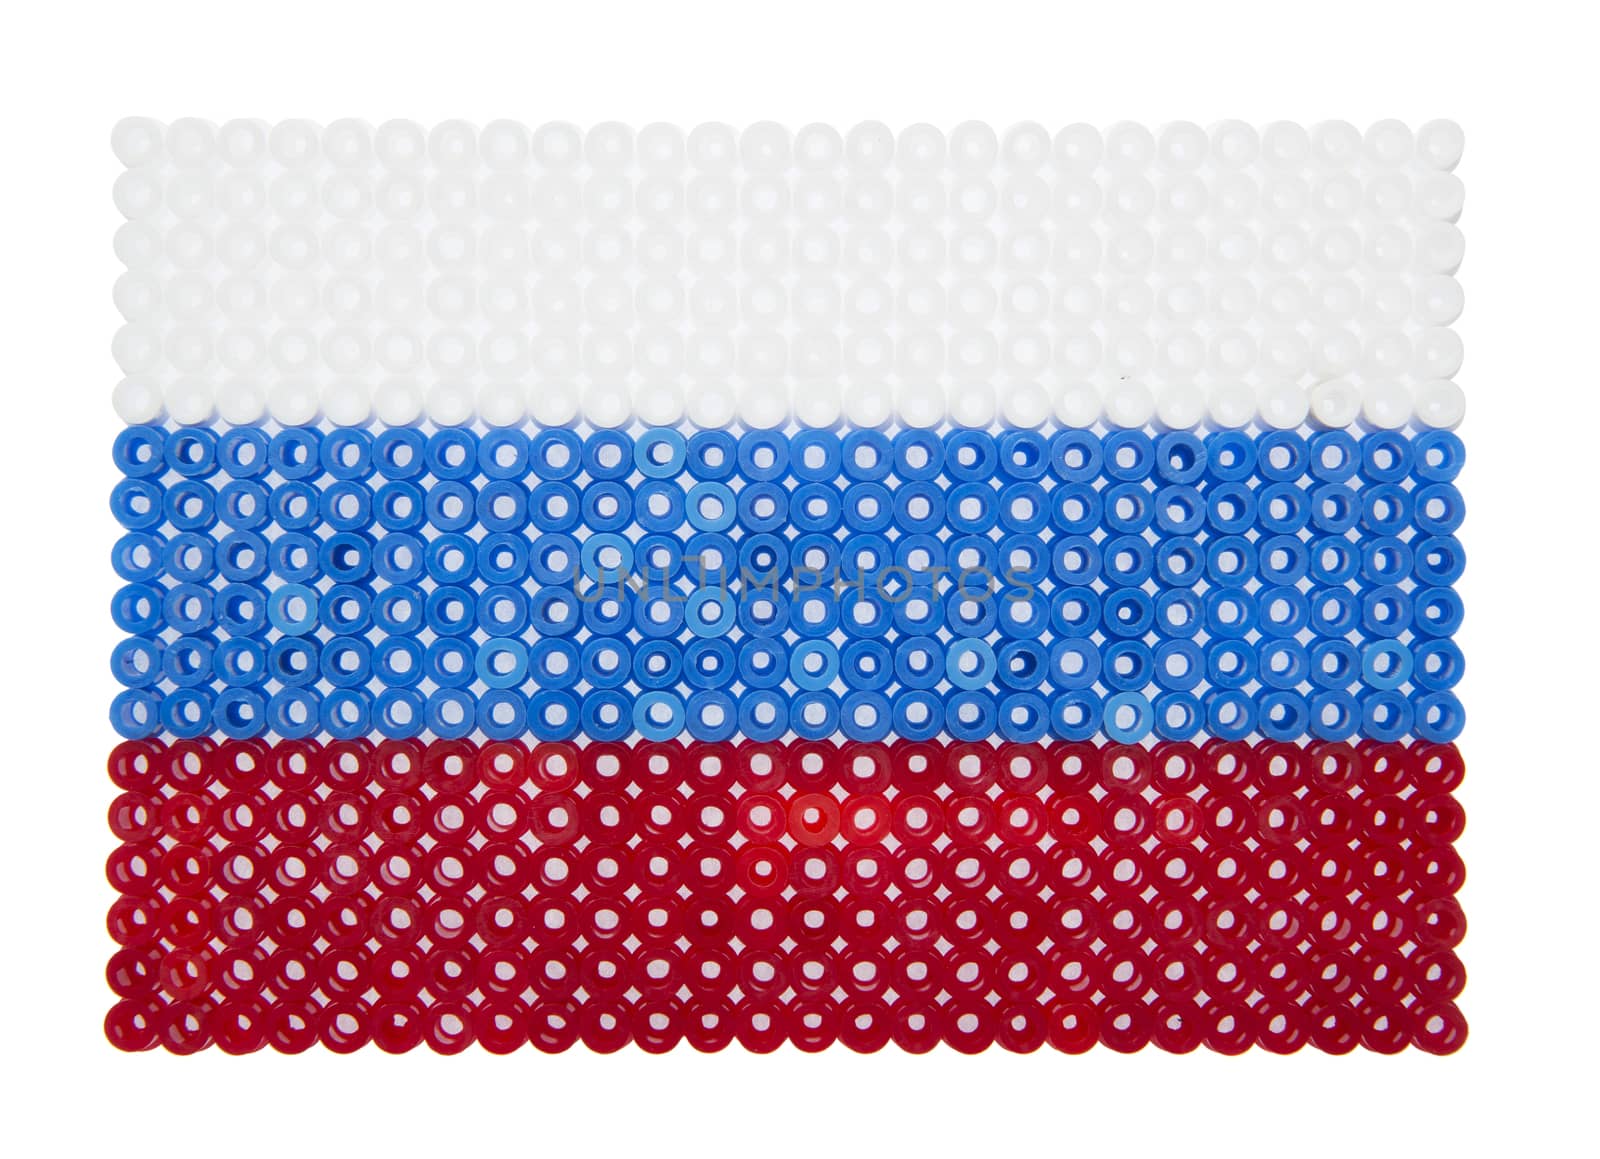 Russian Flag by gemenacom